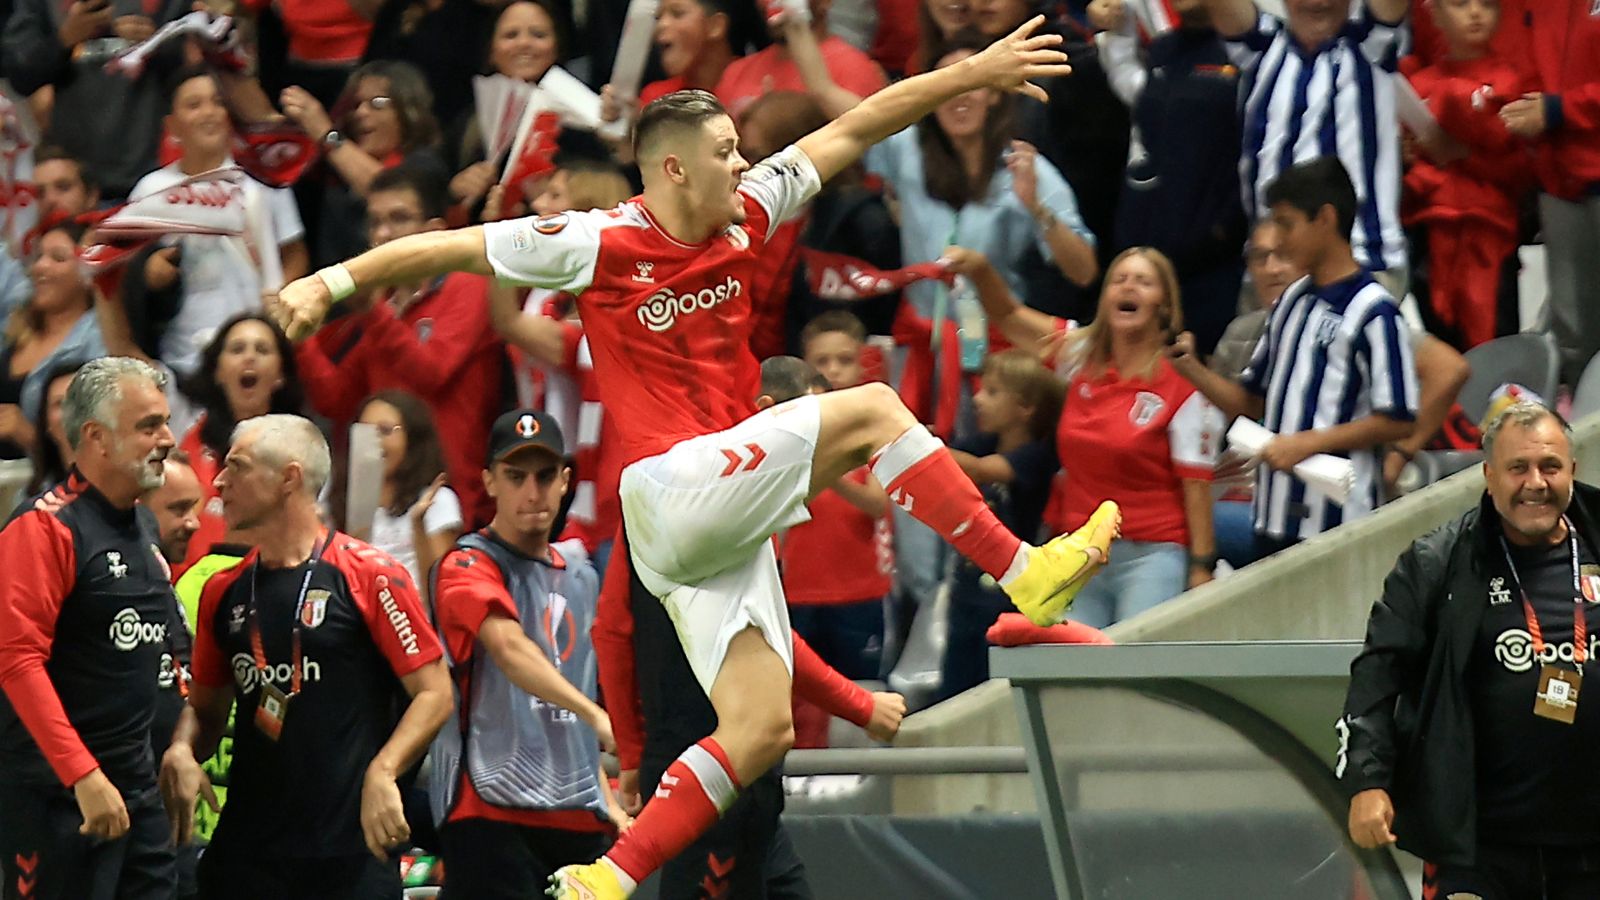 Braga striker Vitinha celebrates after scoring in the Europa League